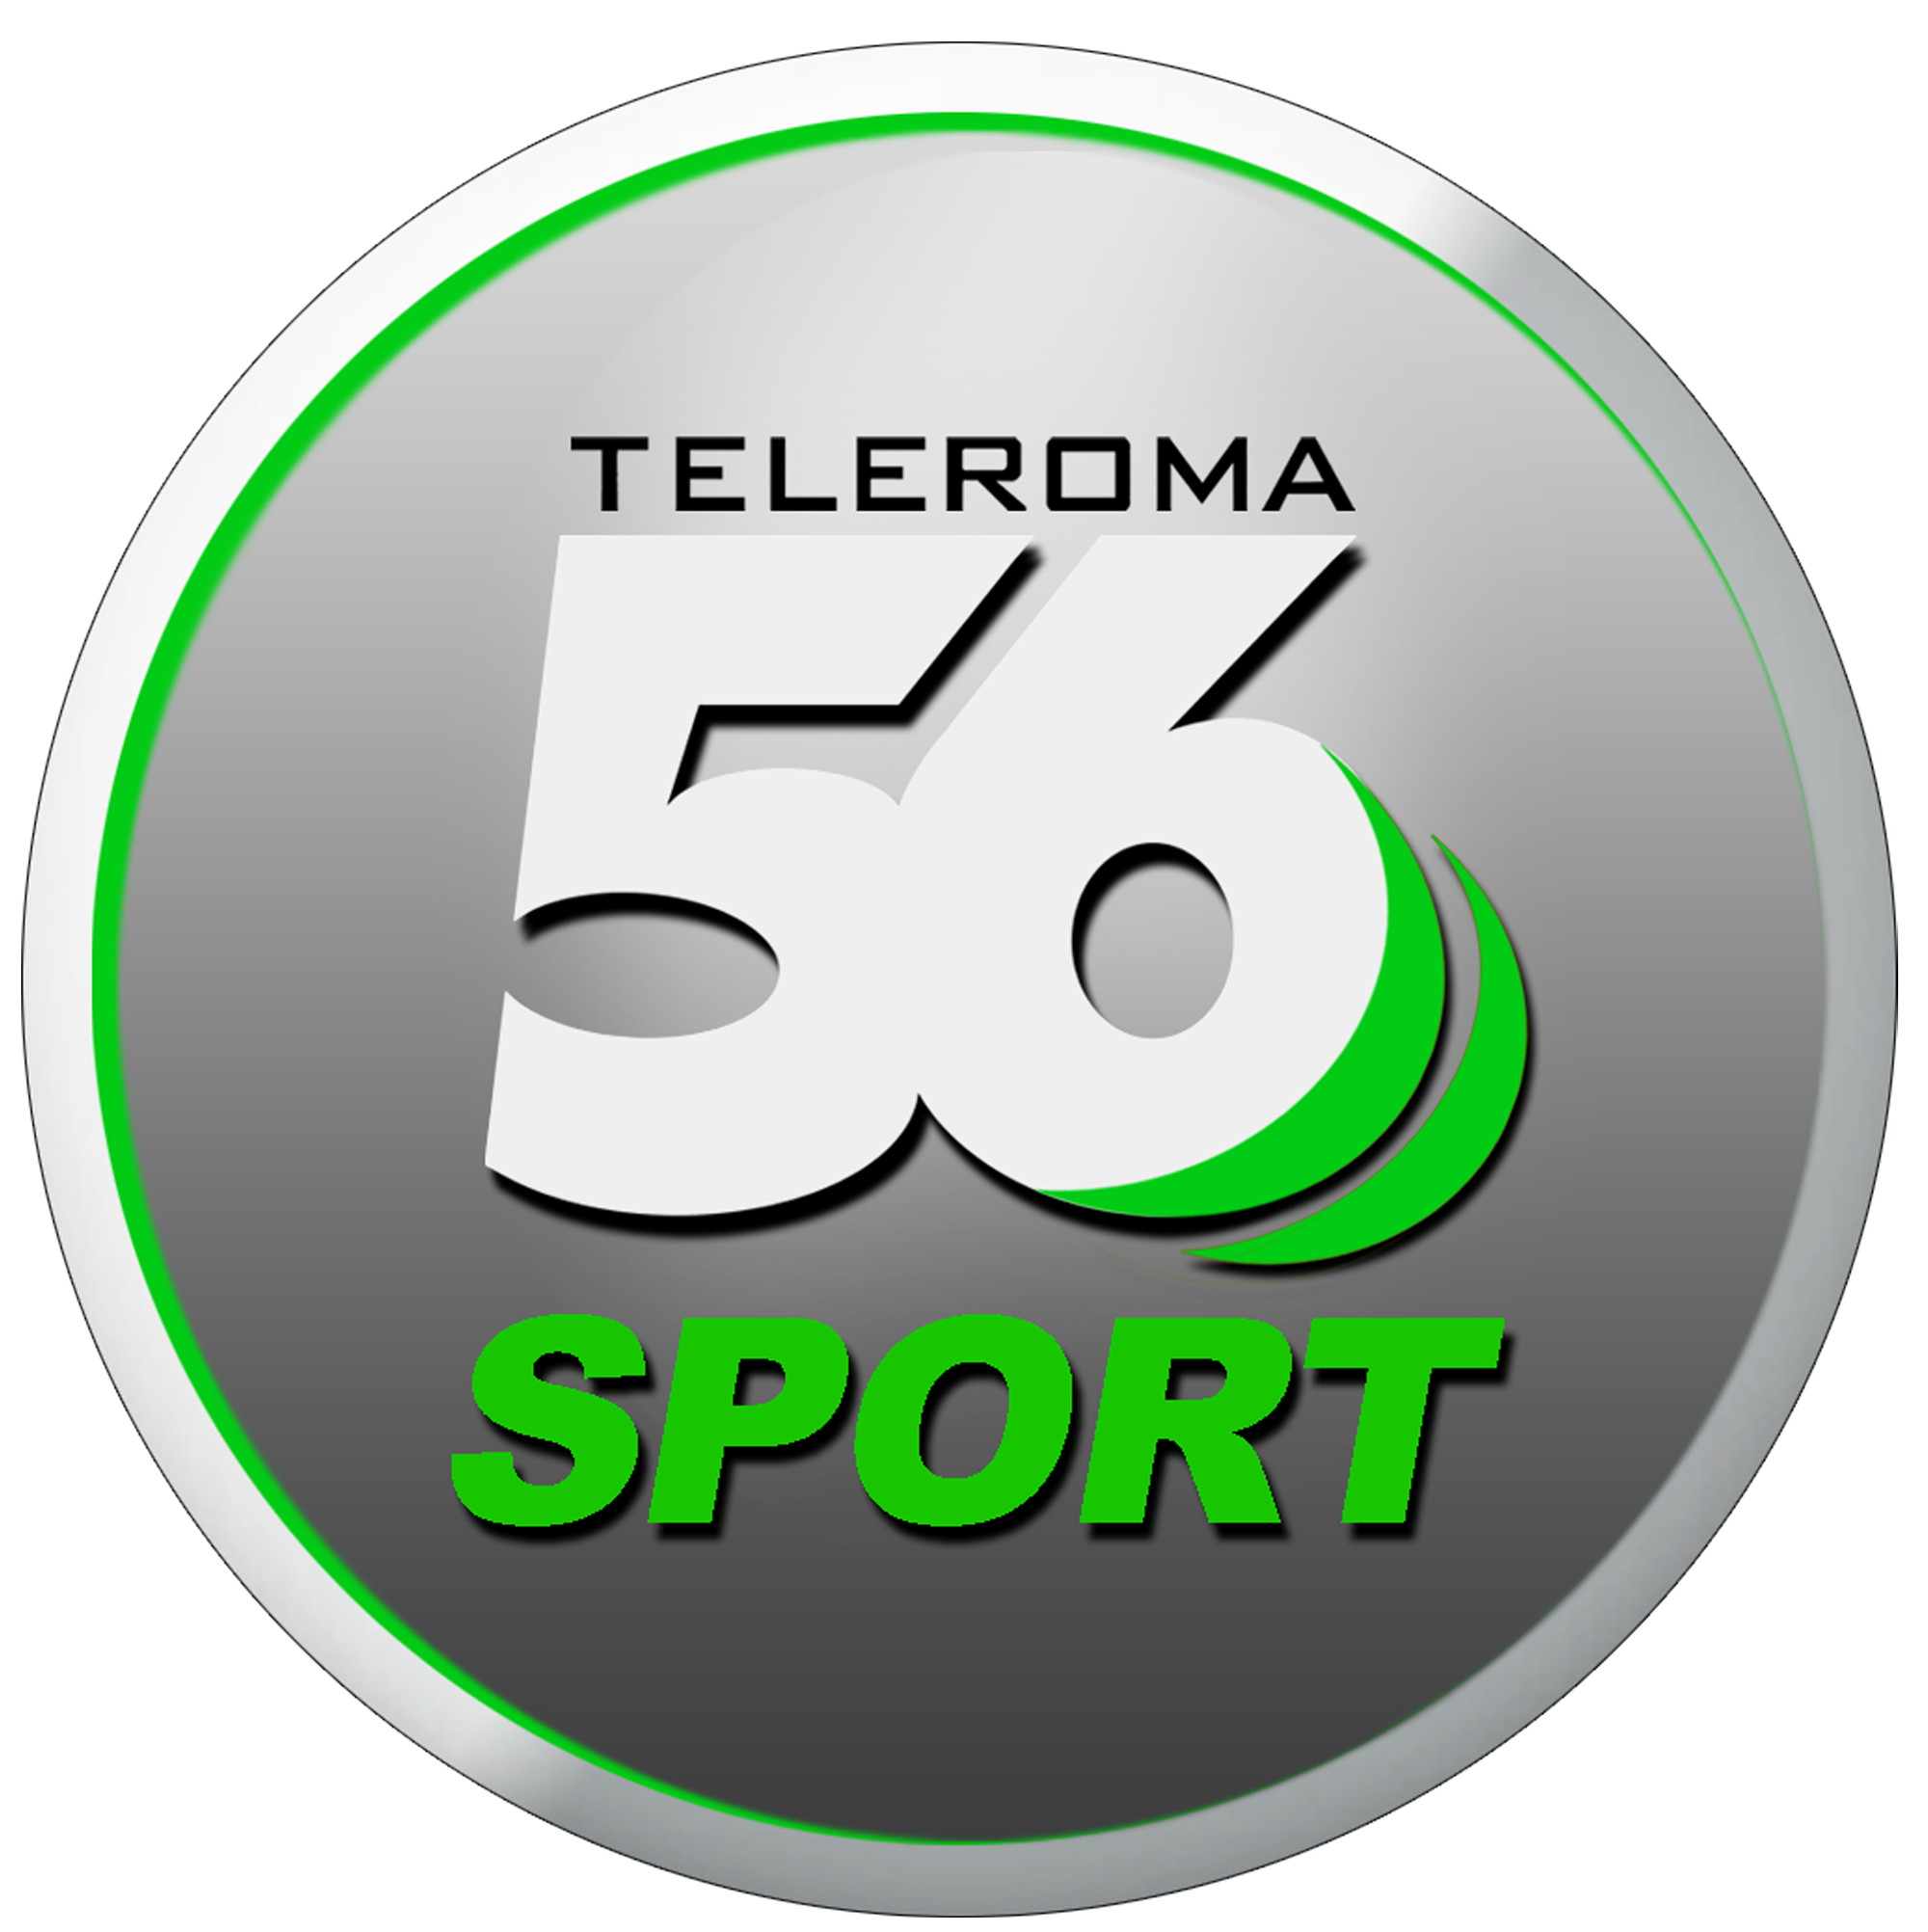 Teleroma 56 sport